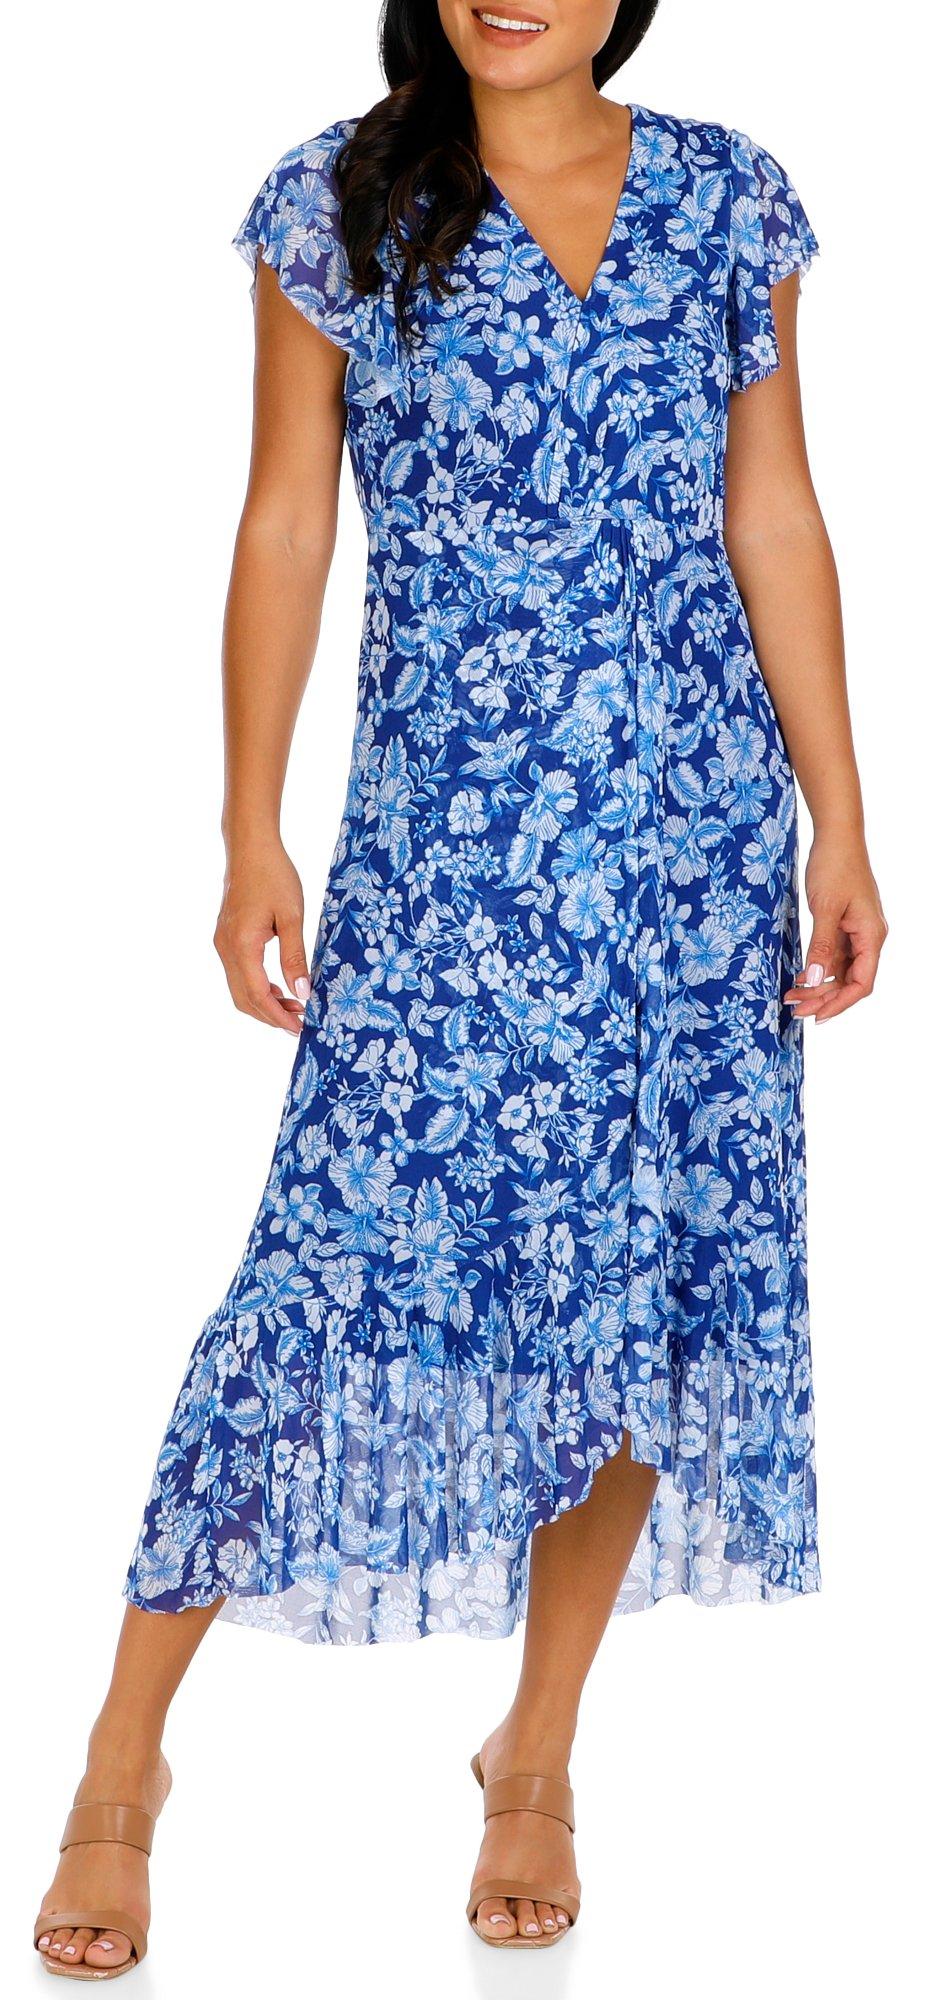 Women's Floral Maxi Dress